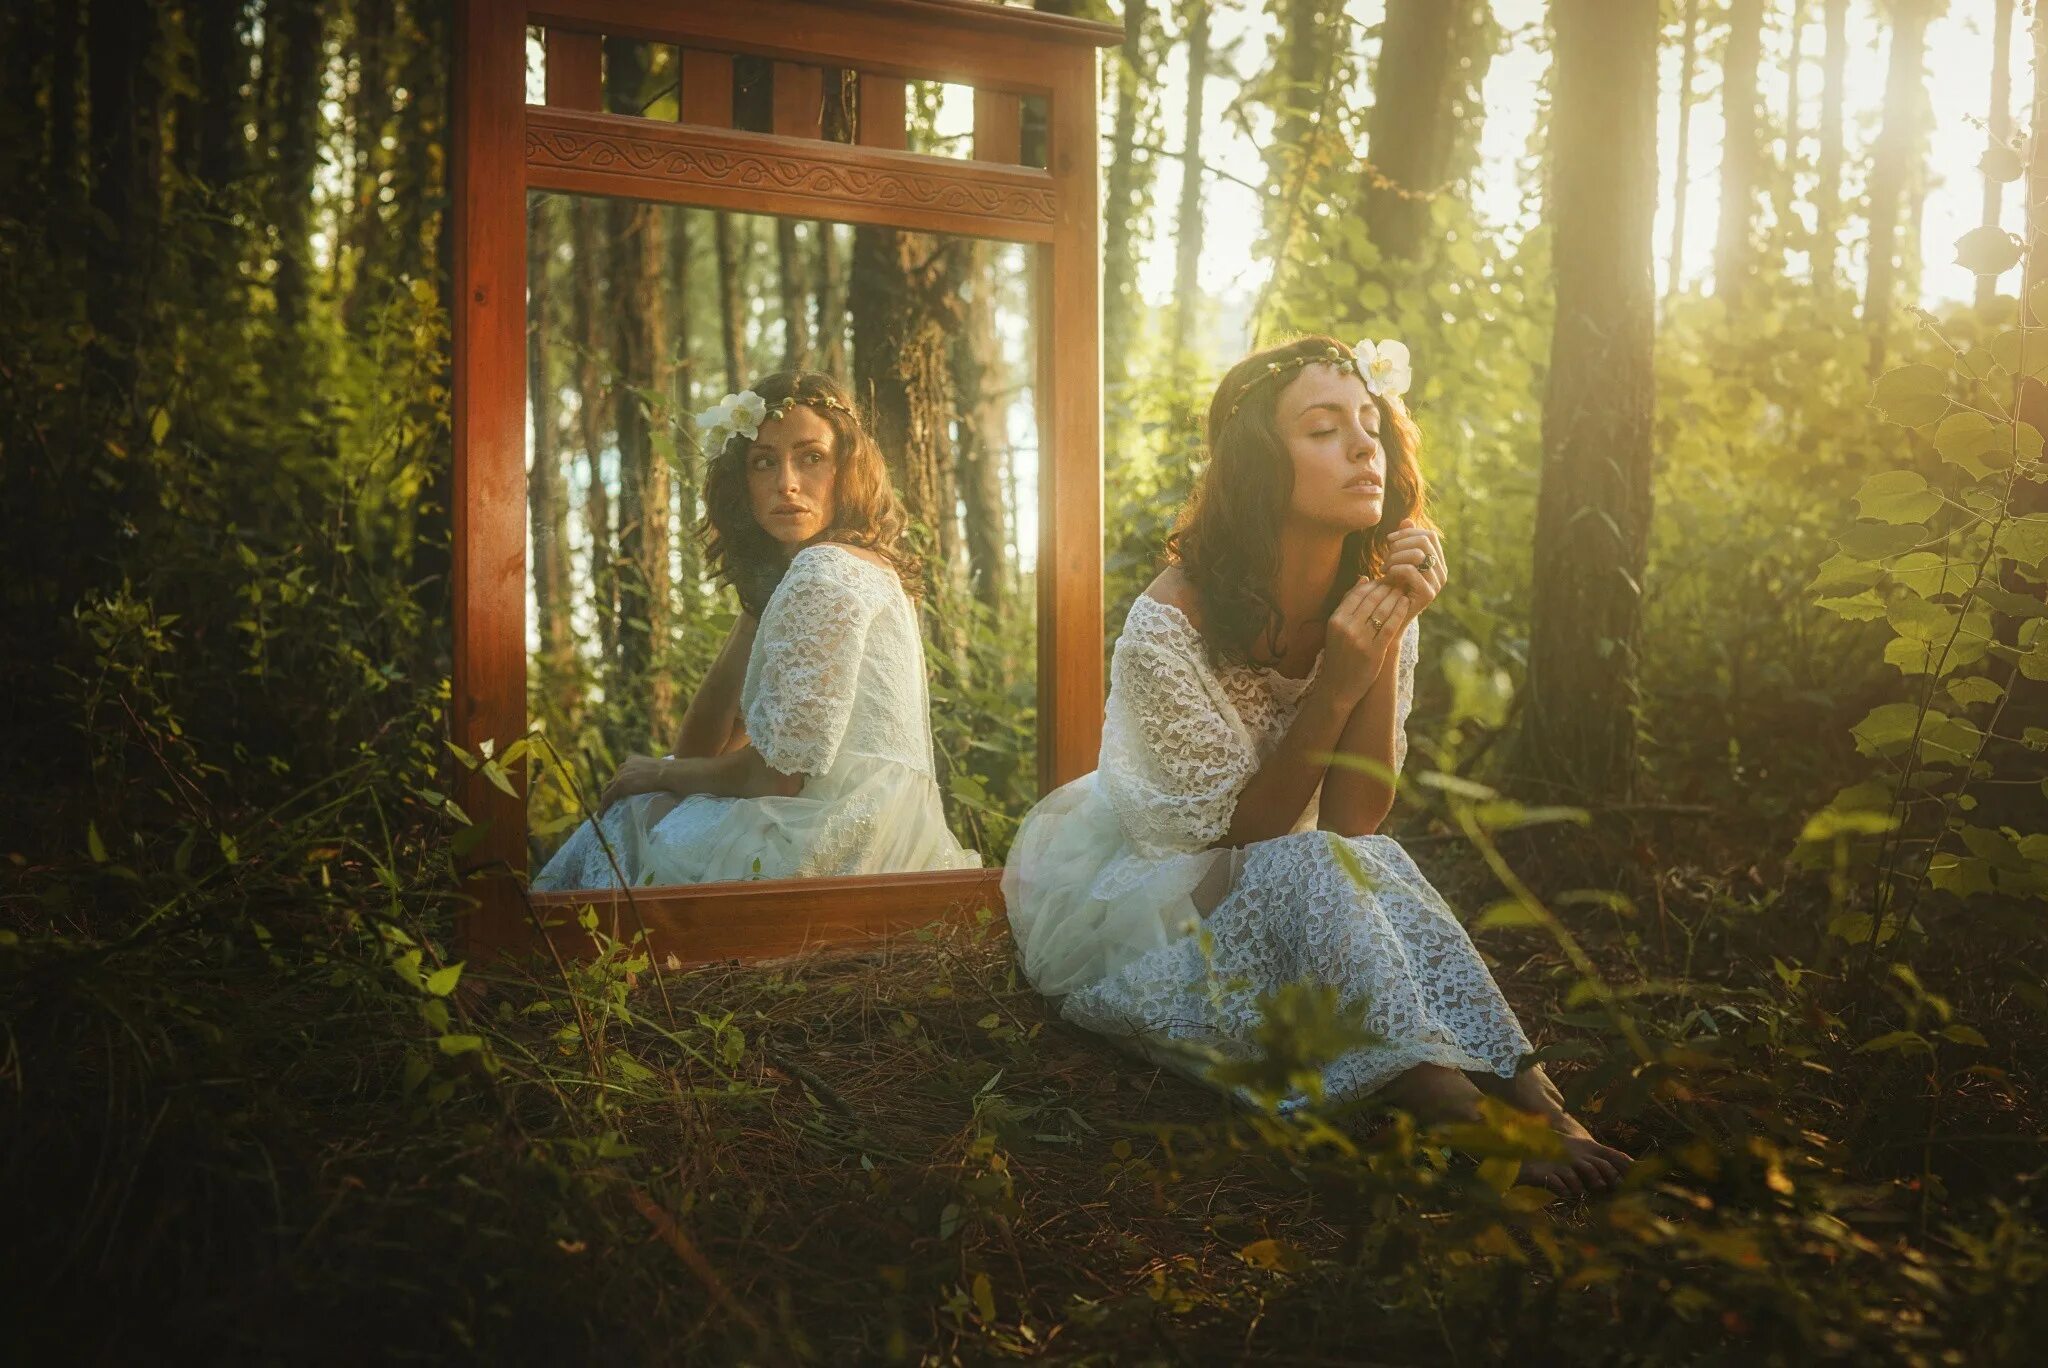 Reflection woman. Фотосессия в лесу. Зеркало в лесу. Фотосессия отражение в зеркале. Фотосессия с зеркалом на природе.